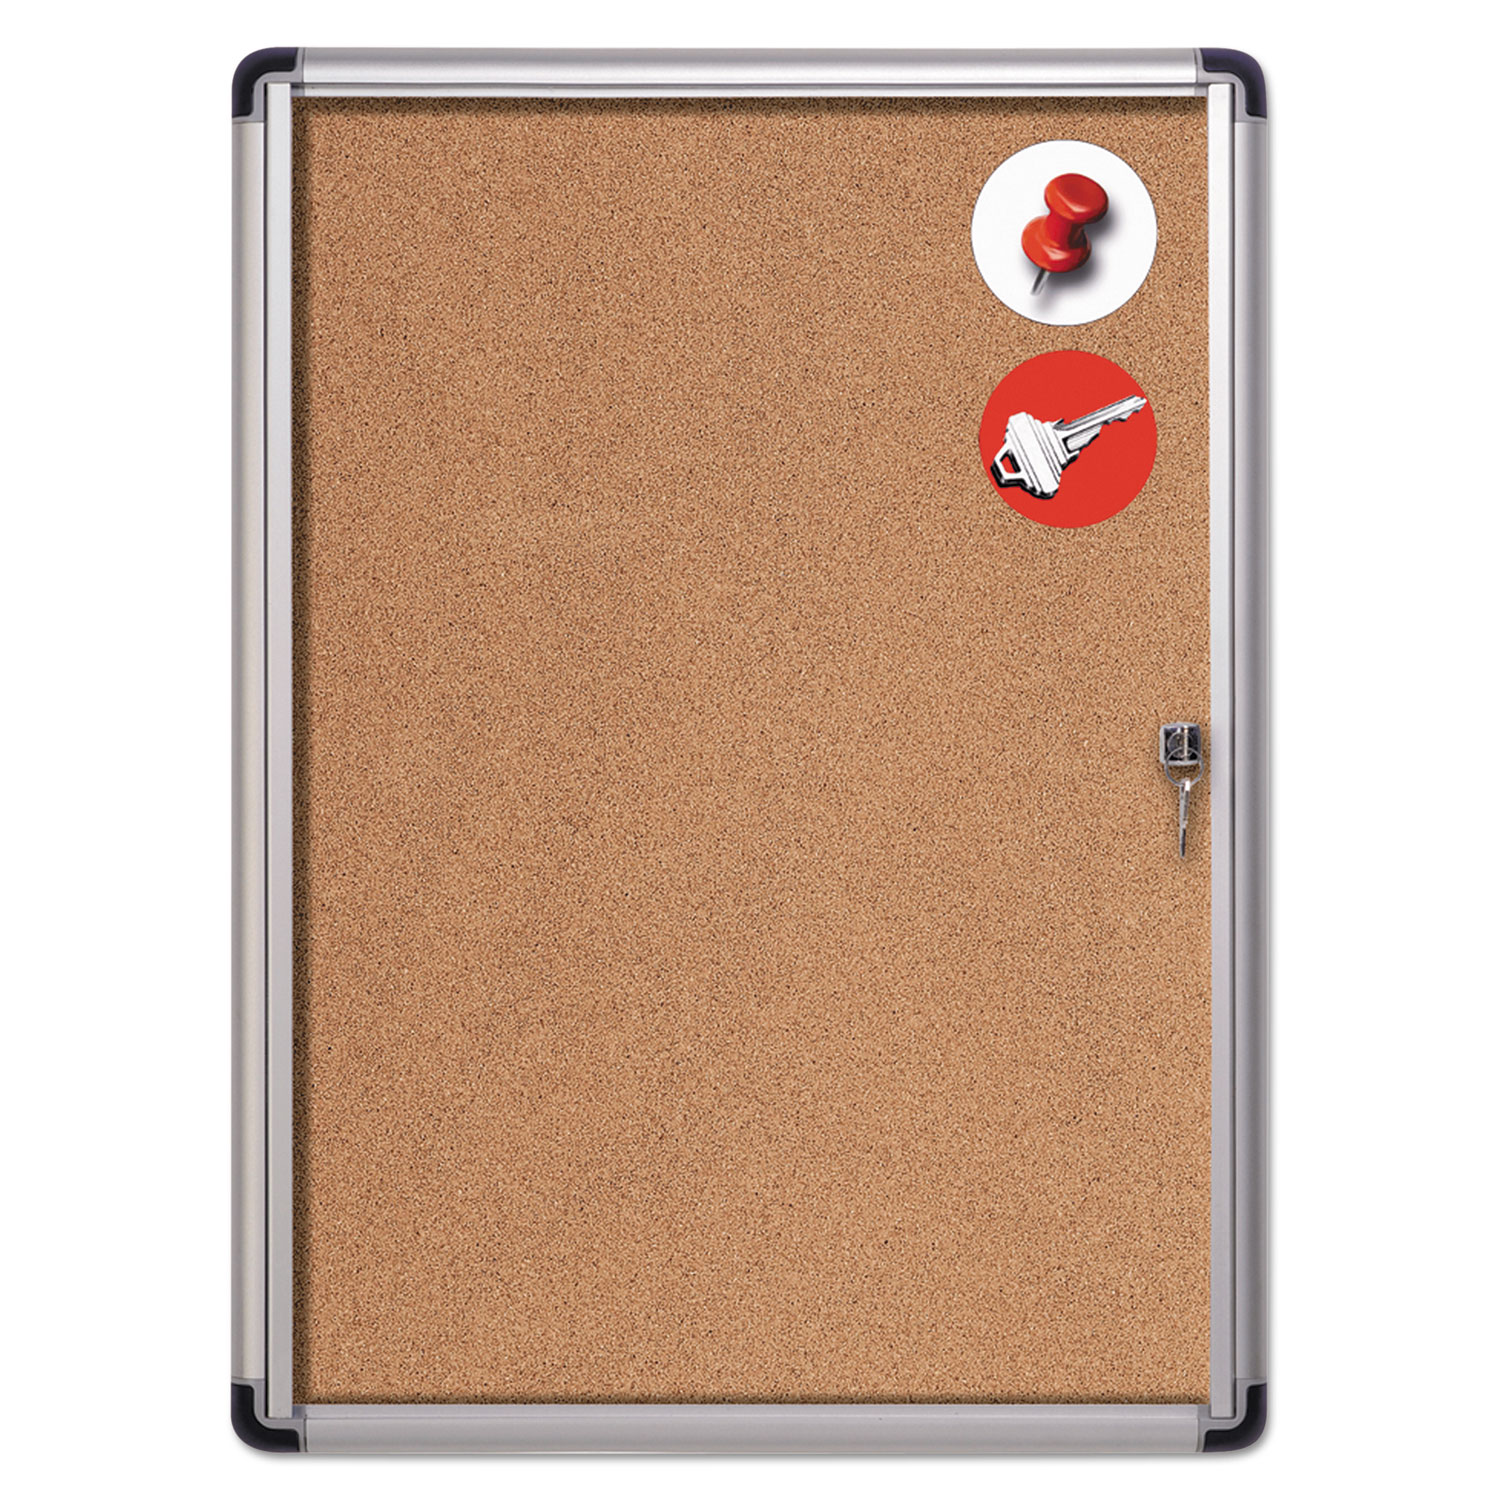  MasterVision VT630101690 Slim-Line Enclosed Cork Bulletin Board, 28 x 38, Aluminum Case (BVCVT630101690) 